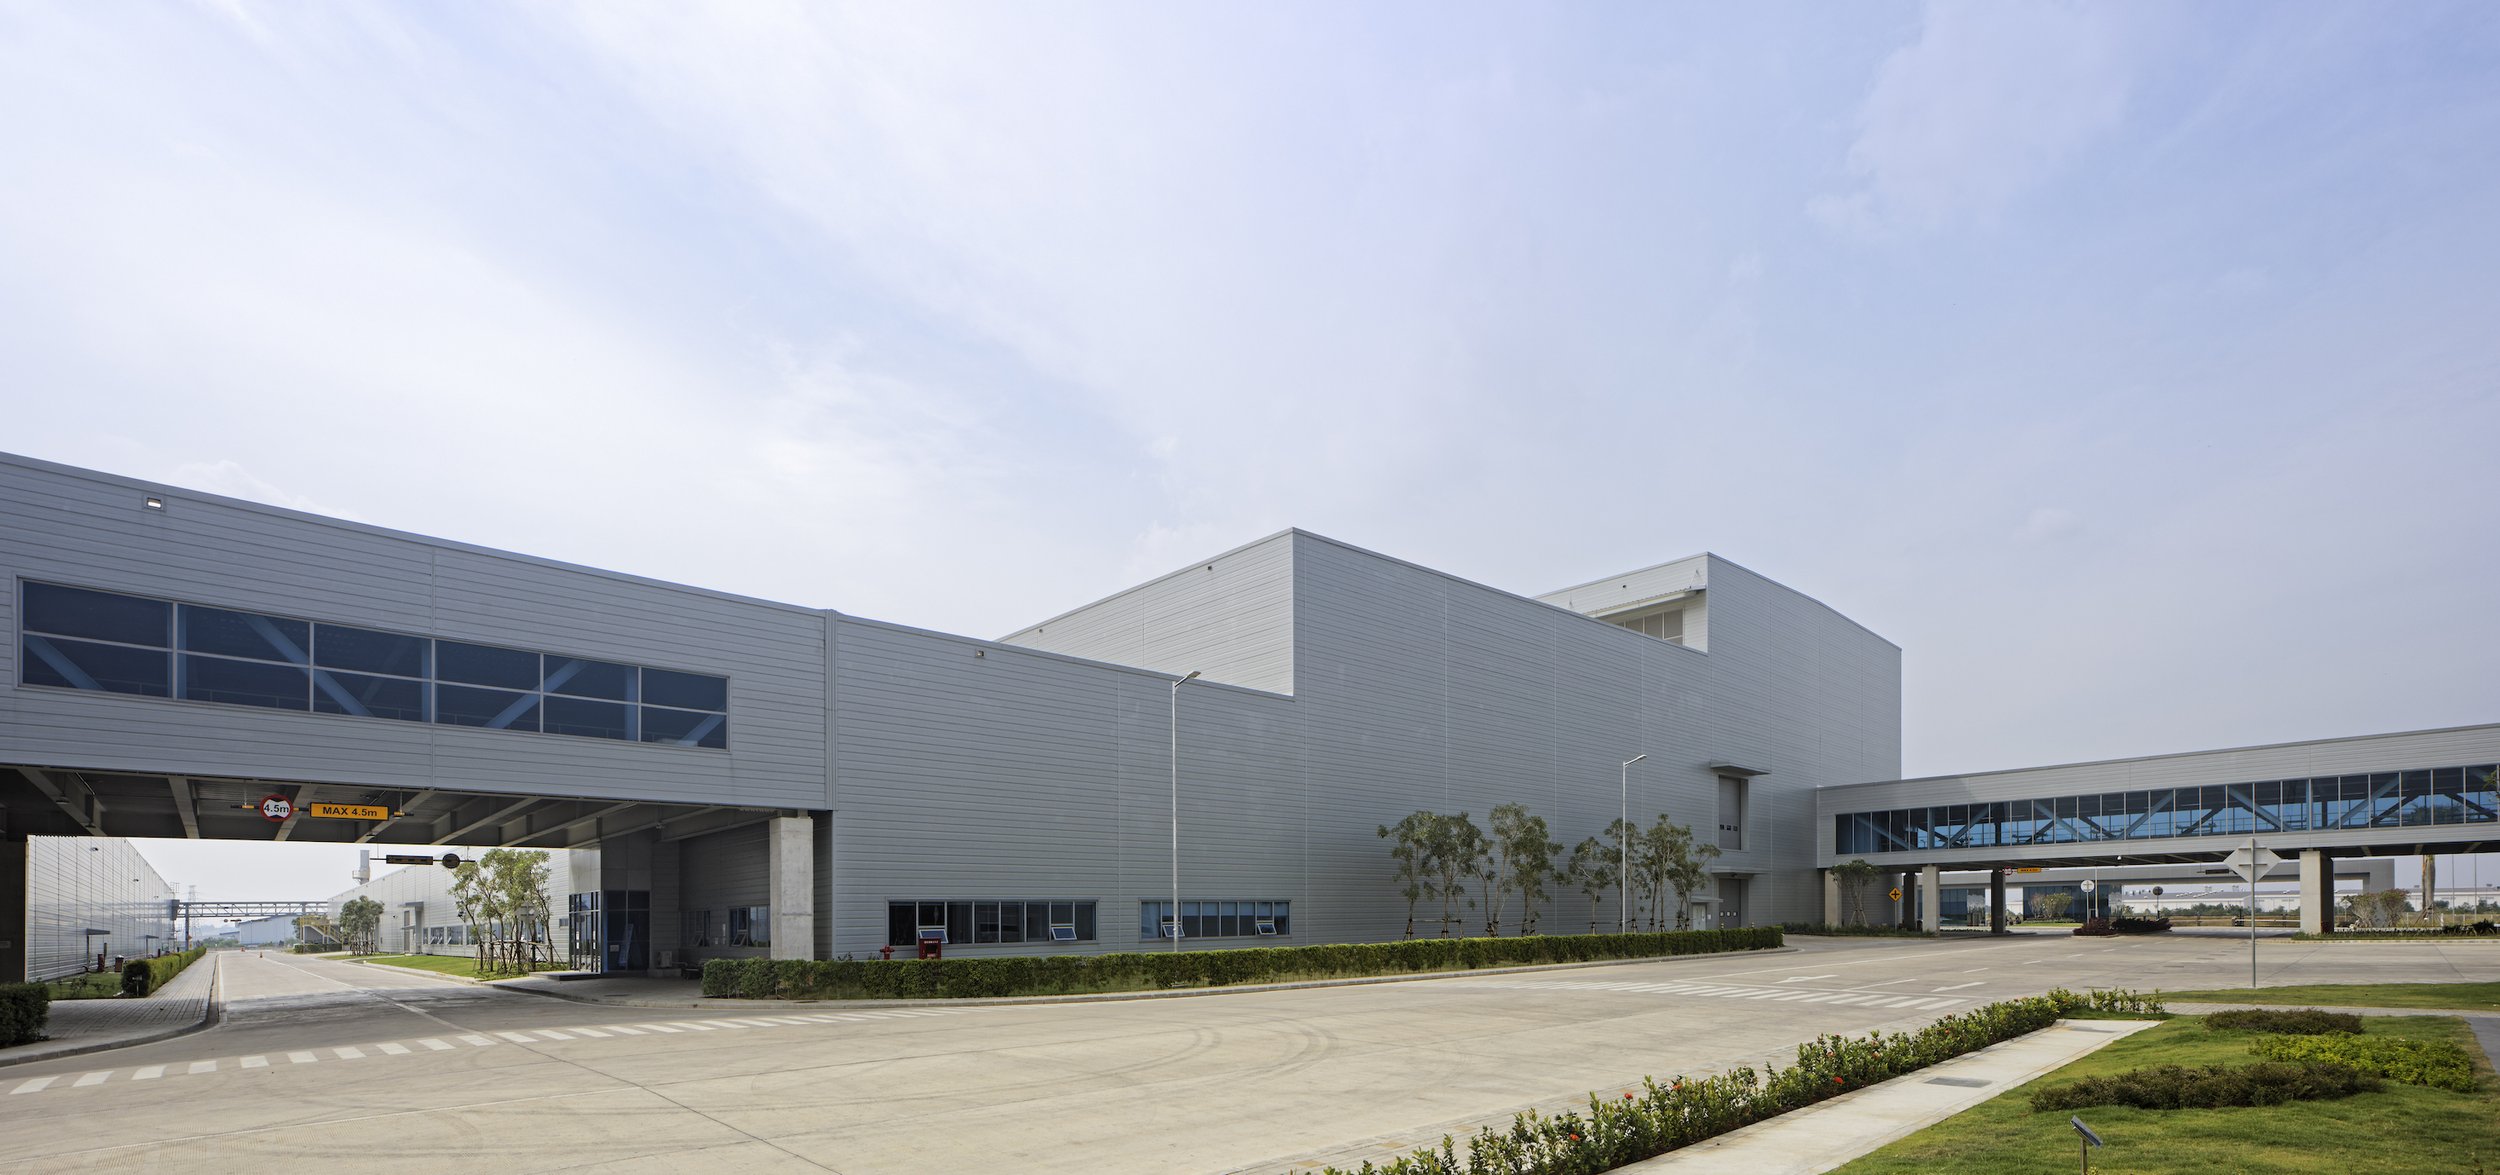 159-Hyundai Factory (TAKENAKA) -29.08__05.09.2021-.jpg